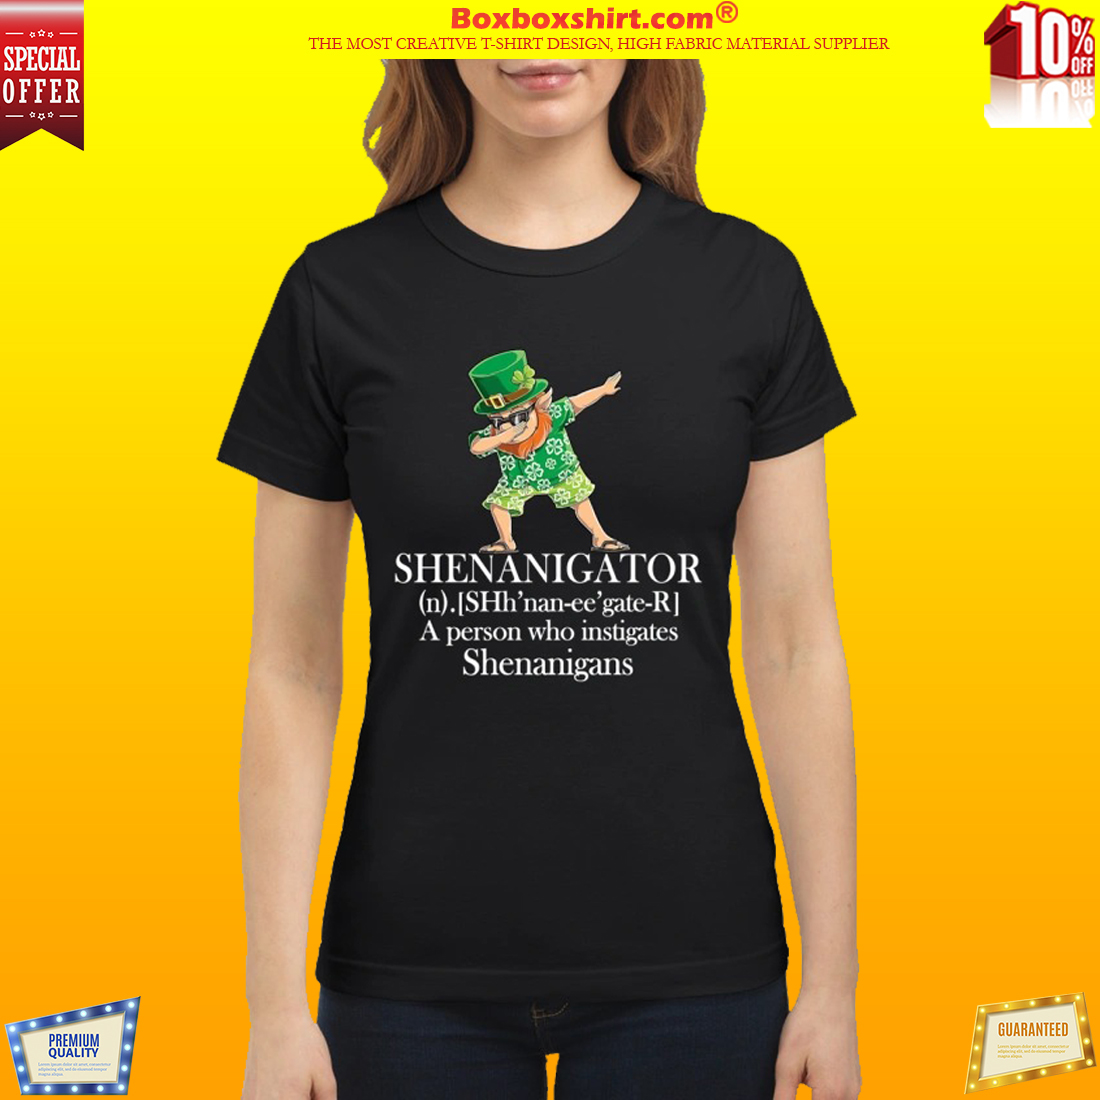 Shenanigator a person who instigates shenanigans classic shirt